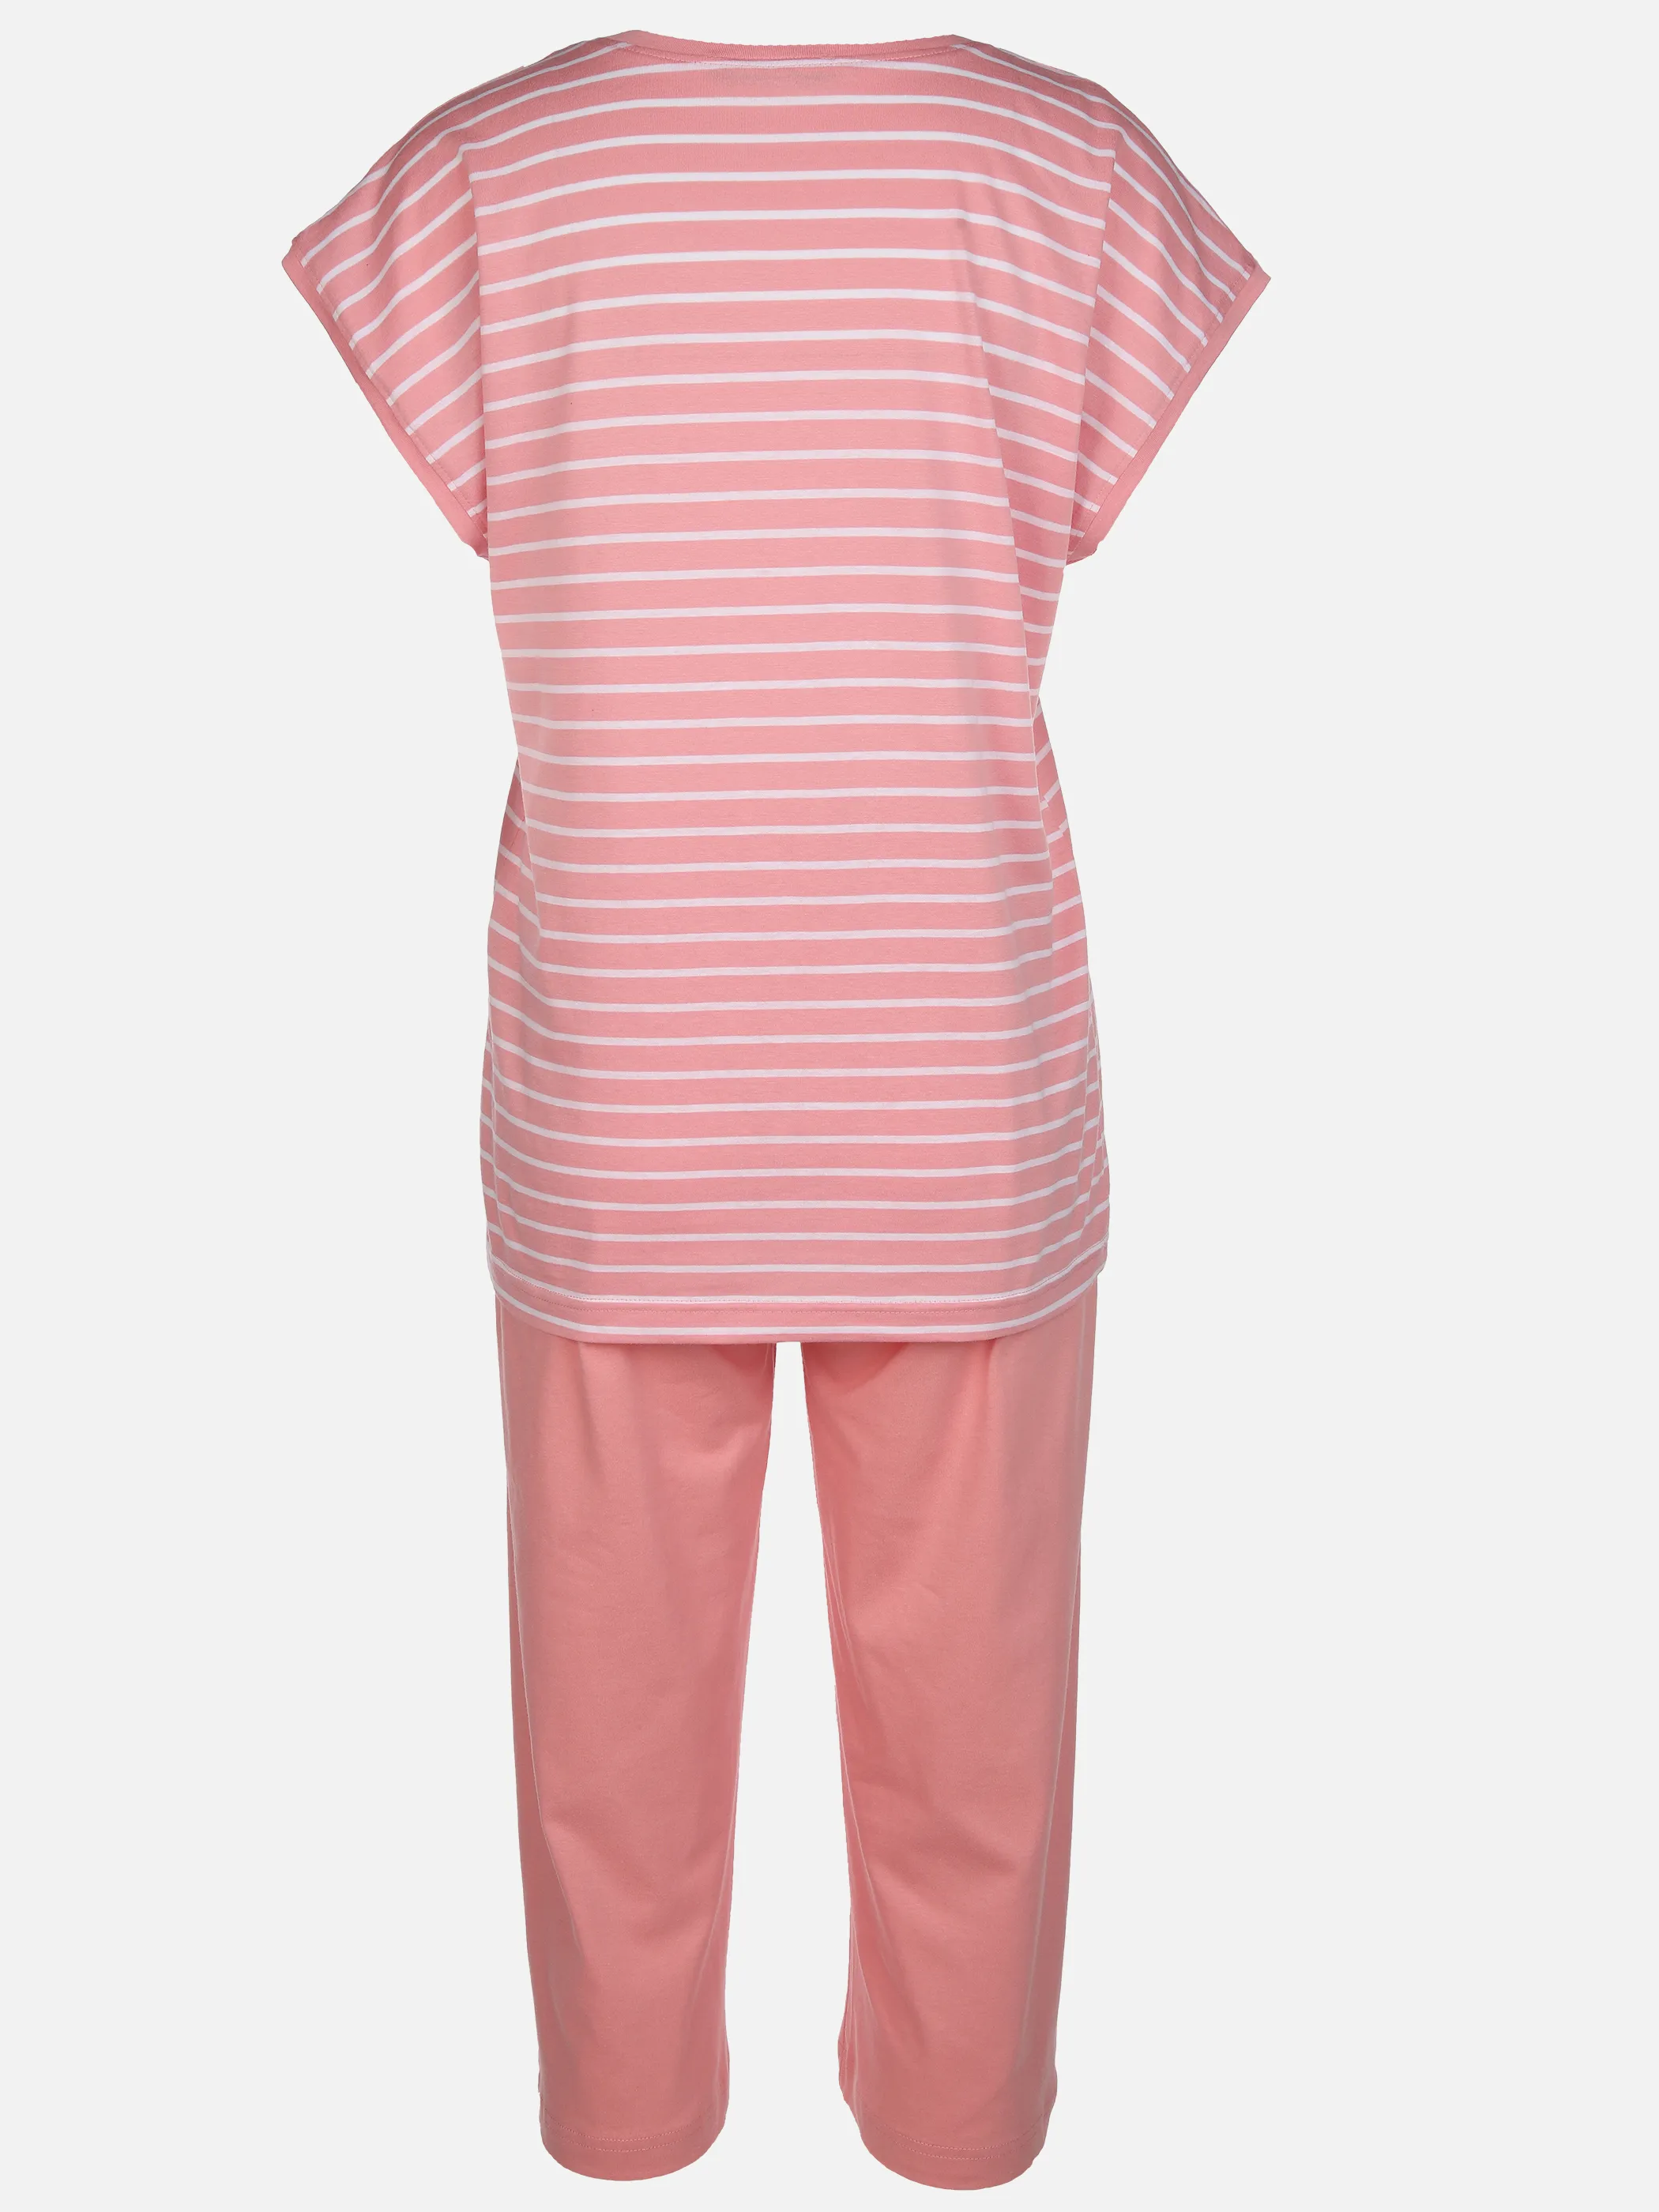 Sure Da. Pyjama Shirt 1/2 Arm gestr Rosa 891765 ROSA/WEIß 2